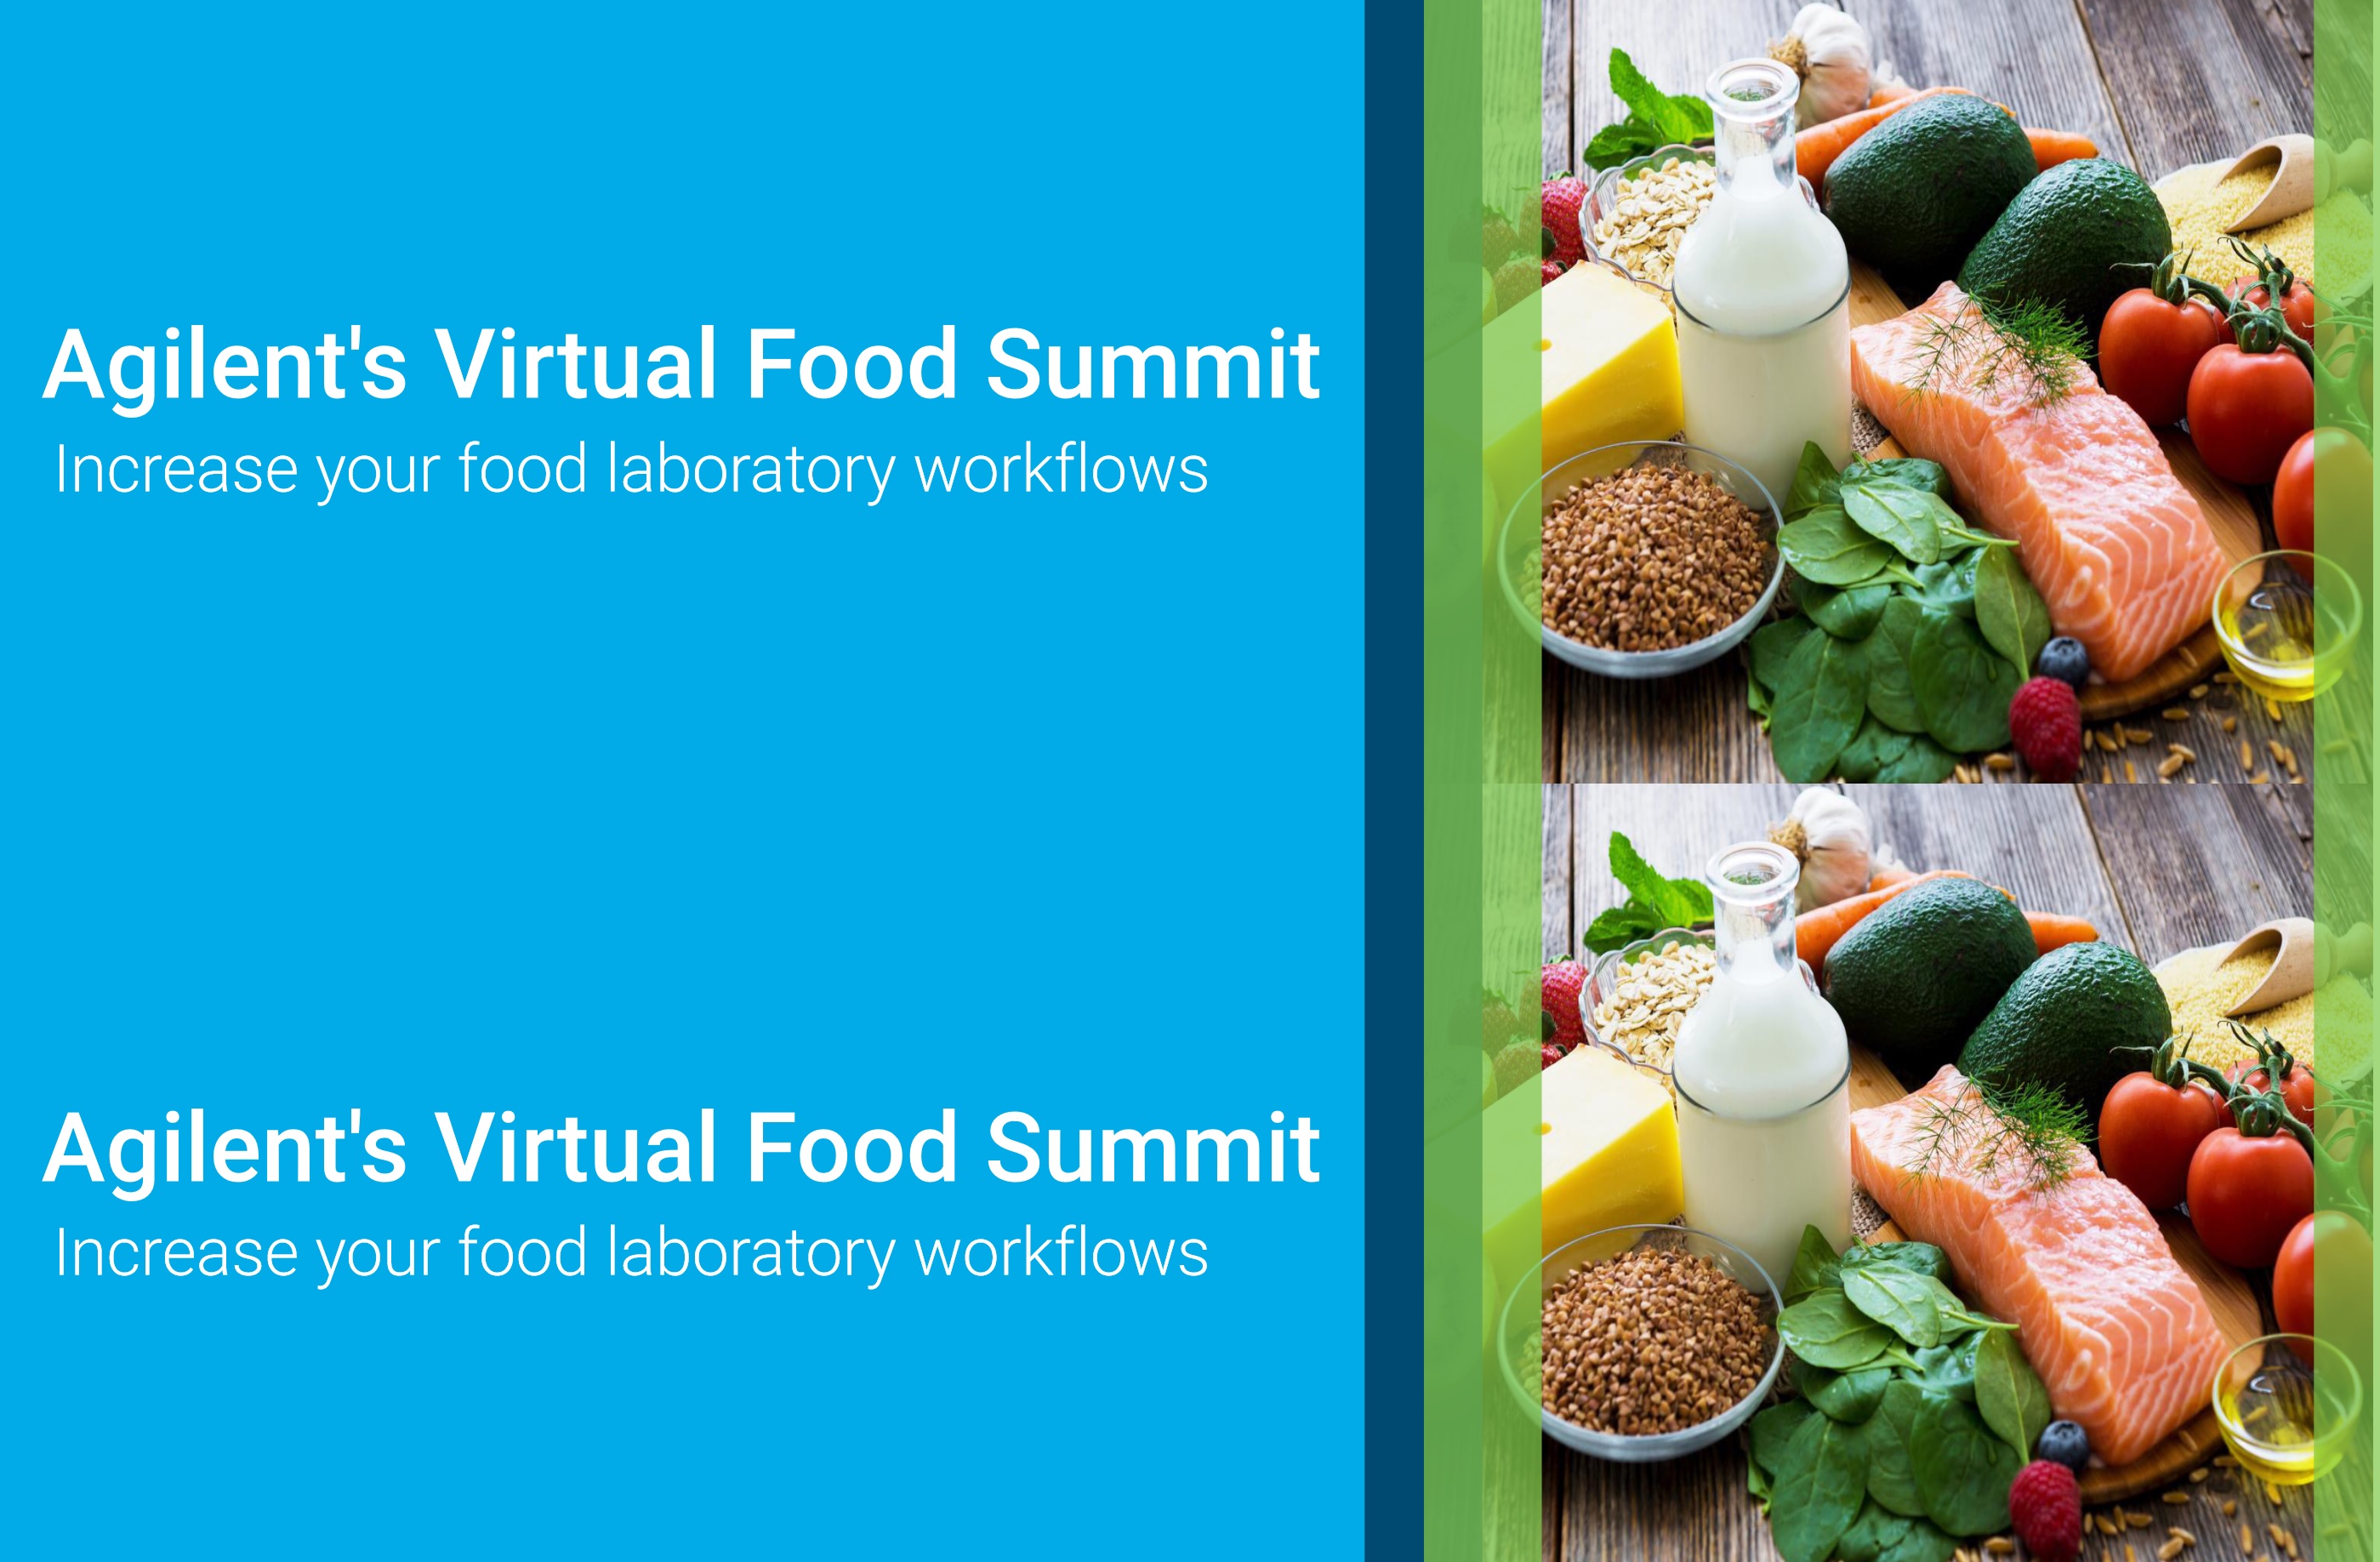 Agilent Technologies: Agilent's Virtual Food Summit - Increase your food laboratory workflows